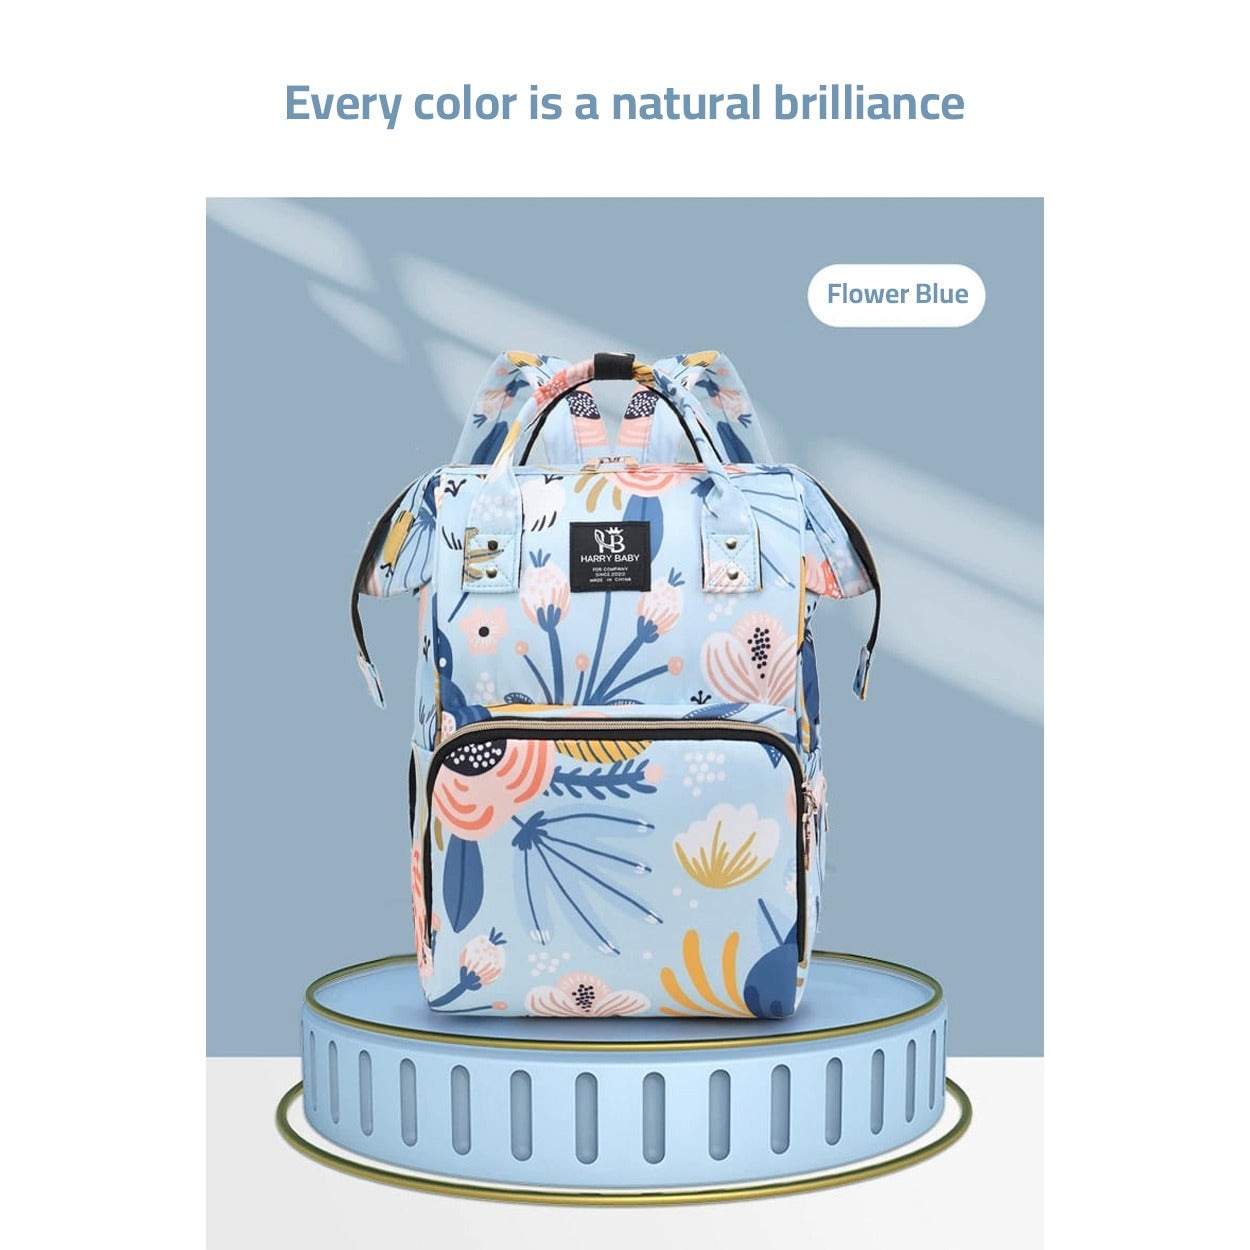 Showcasing Mother Backpack Bag in Flower Blue color 